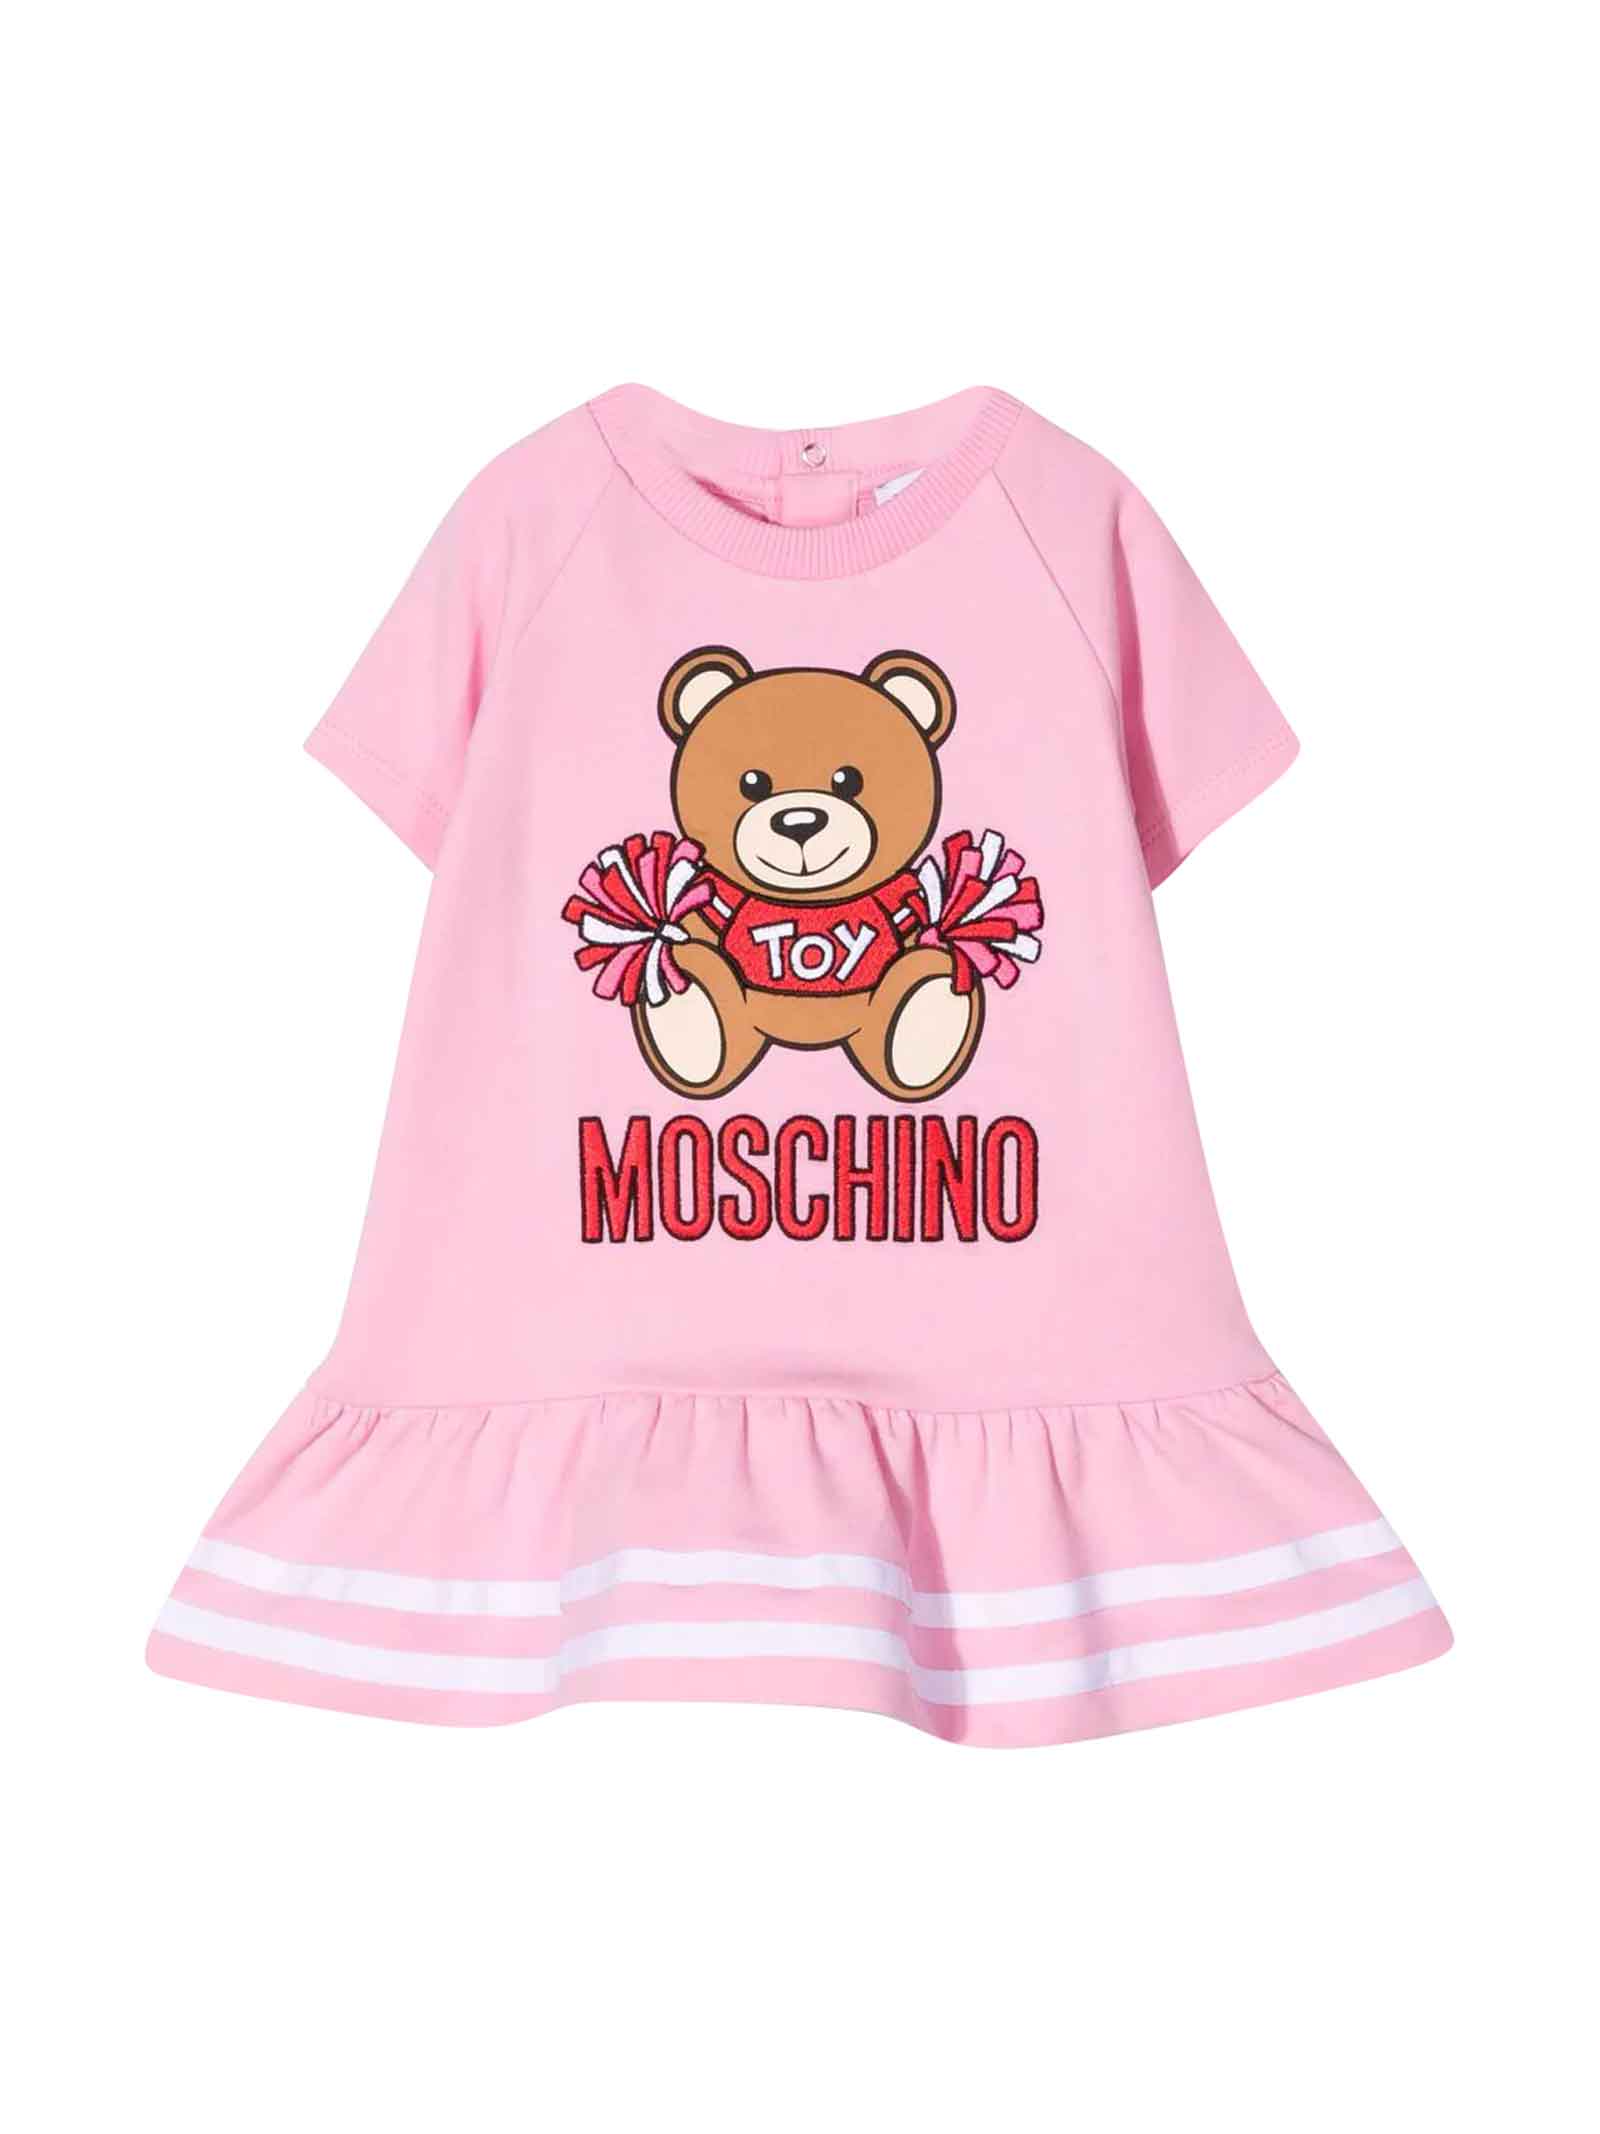 Moschino Newborn Pink Dress